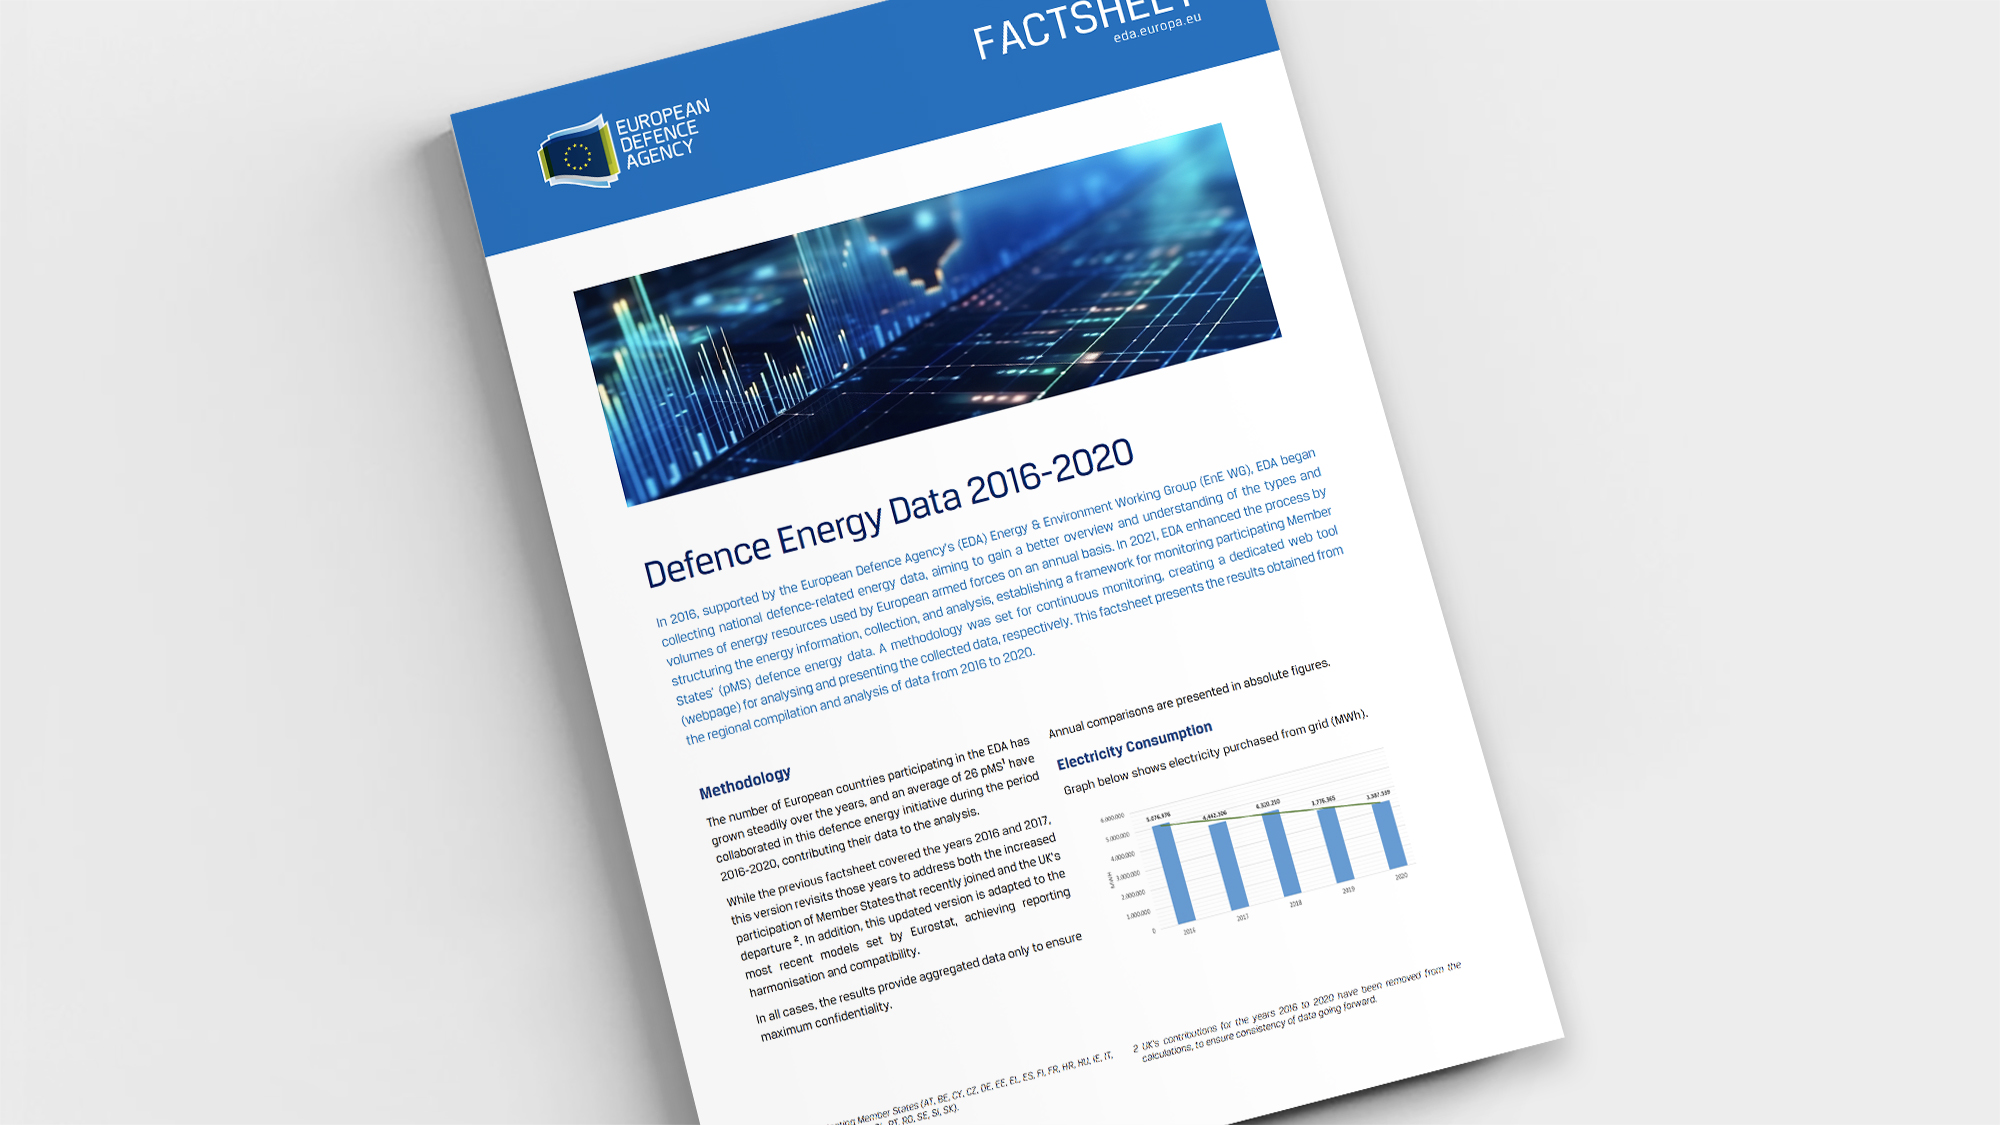 Defence Energy Data 2016-2020 